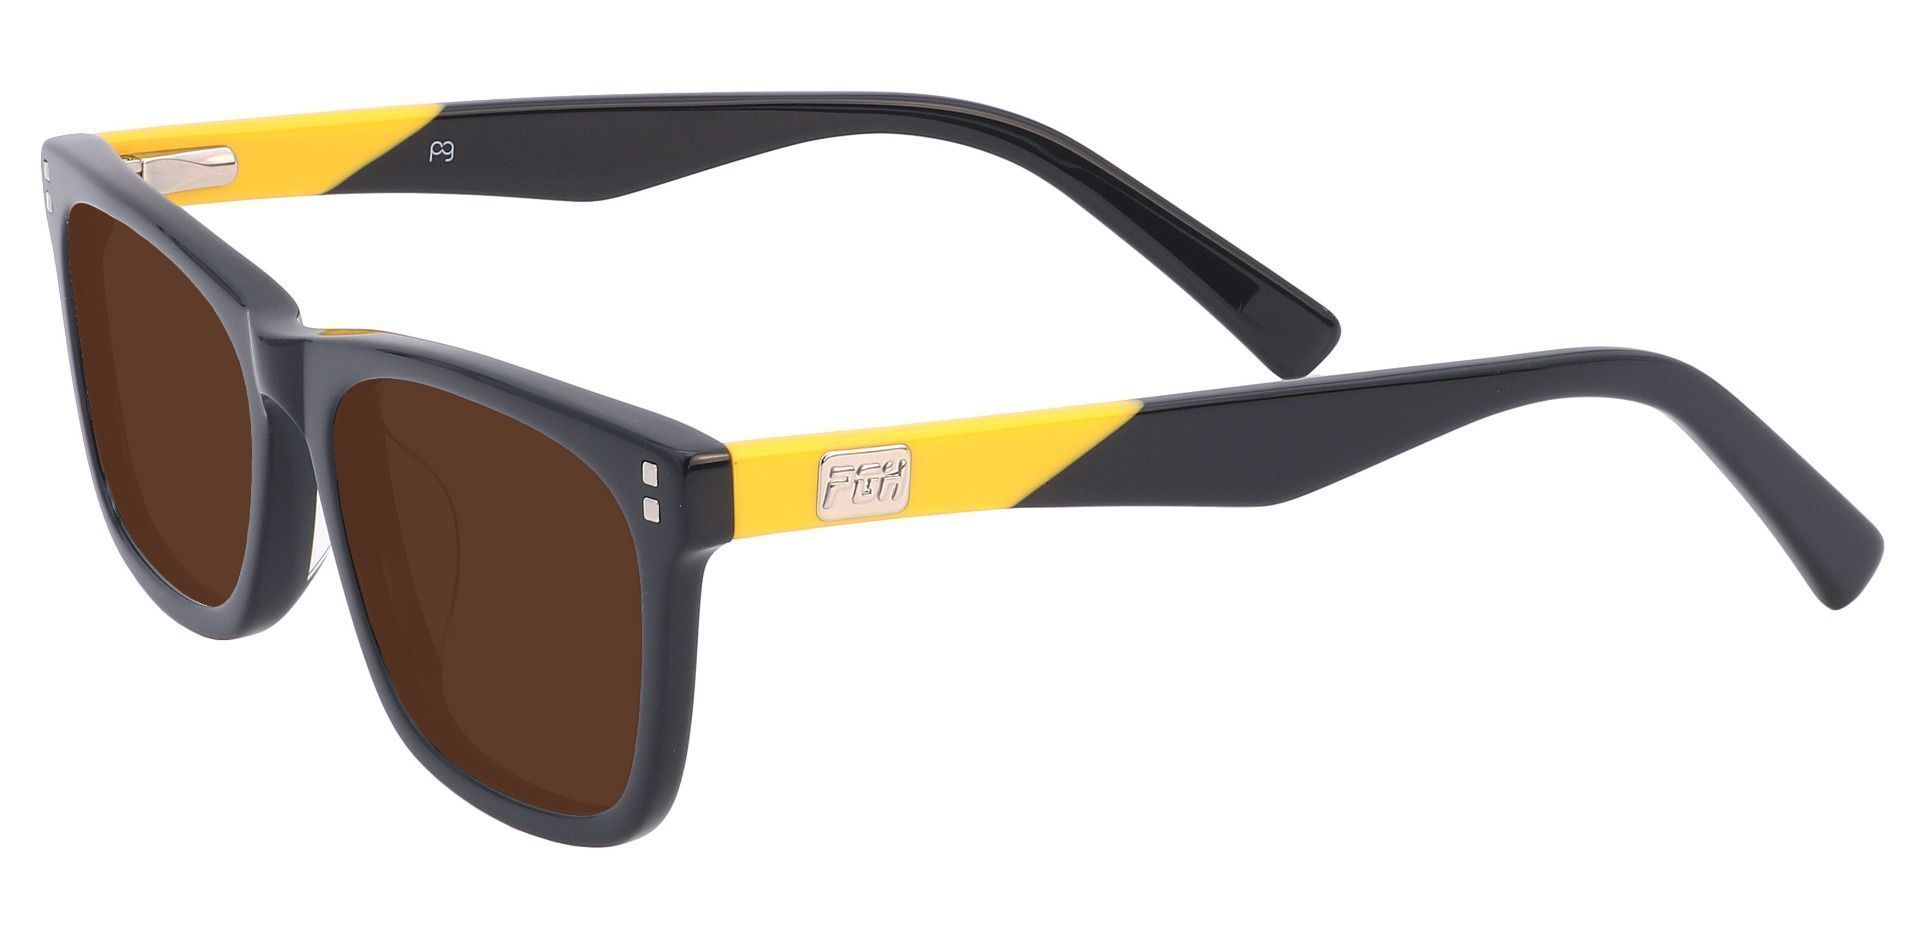 Blitz Rectangle Single Vision Sunglasses - Black Frame With Brown Lenses